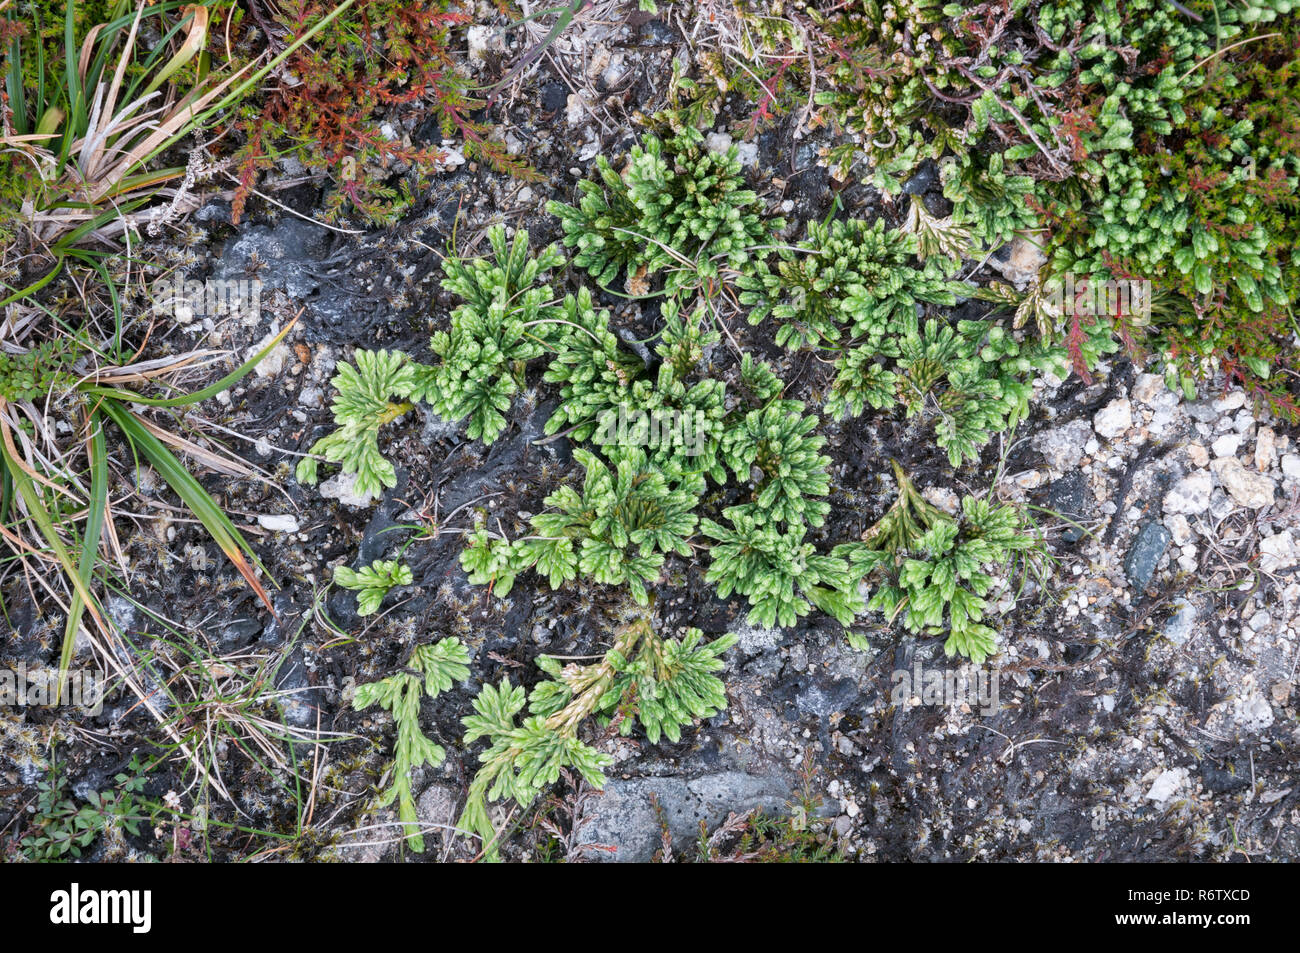 Alpine clubmoss (Diphasiastrum alpinum) in a monate dwarf heath community on the Isle of Arran, Scotland Stock Photo